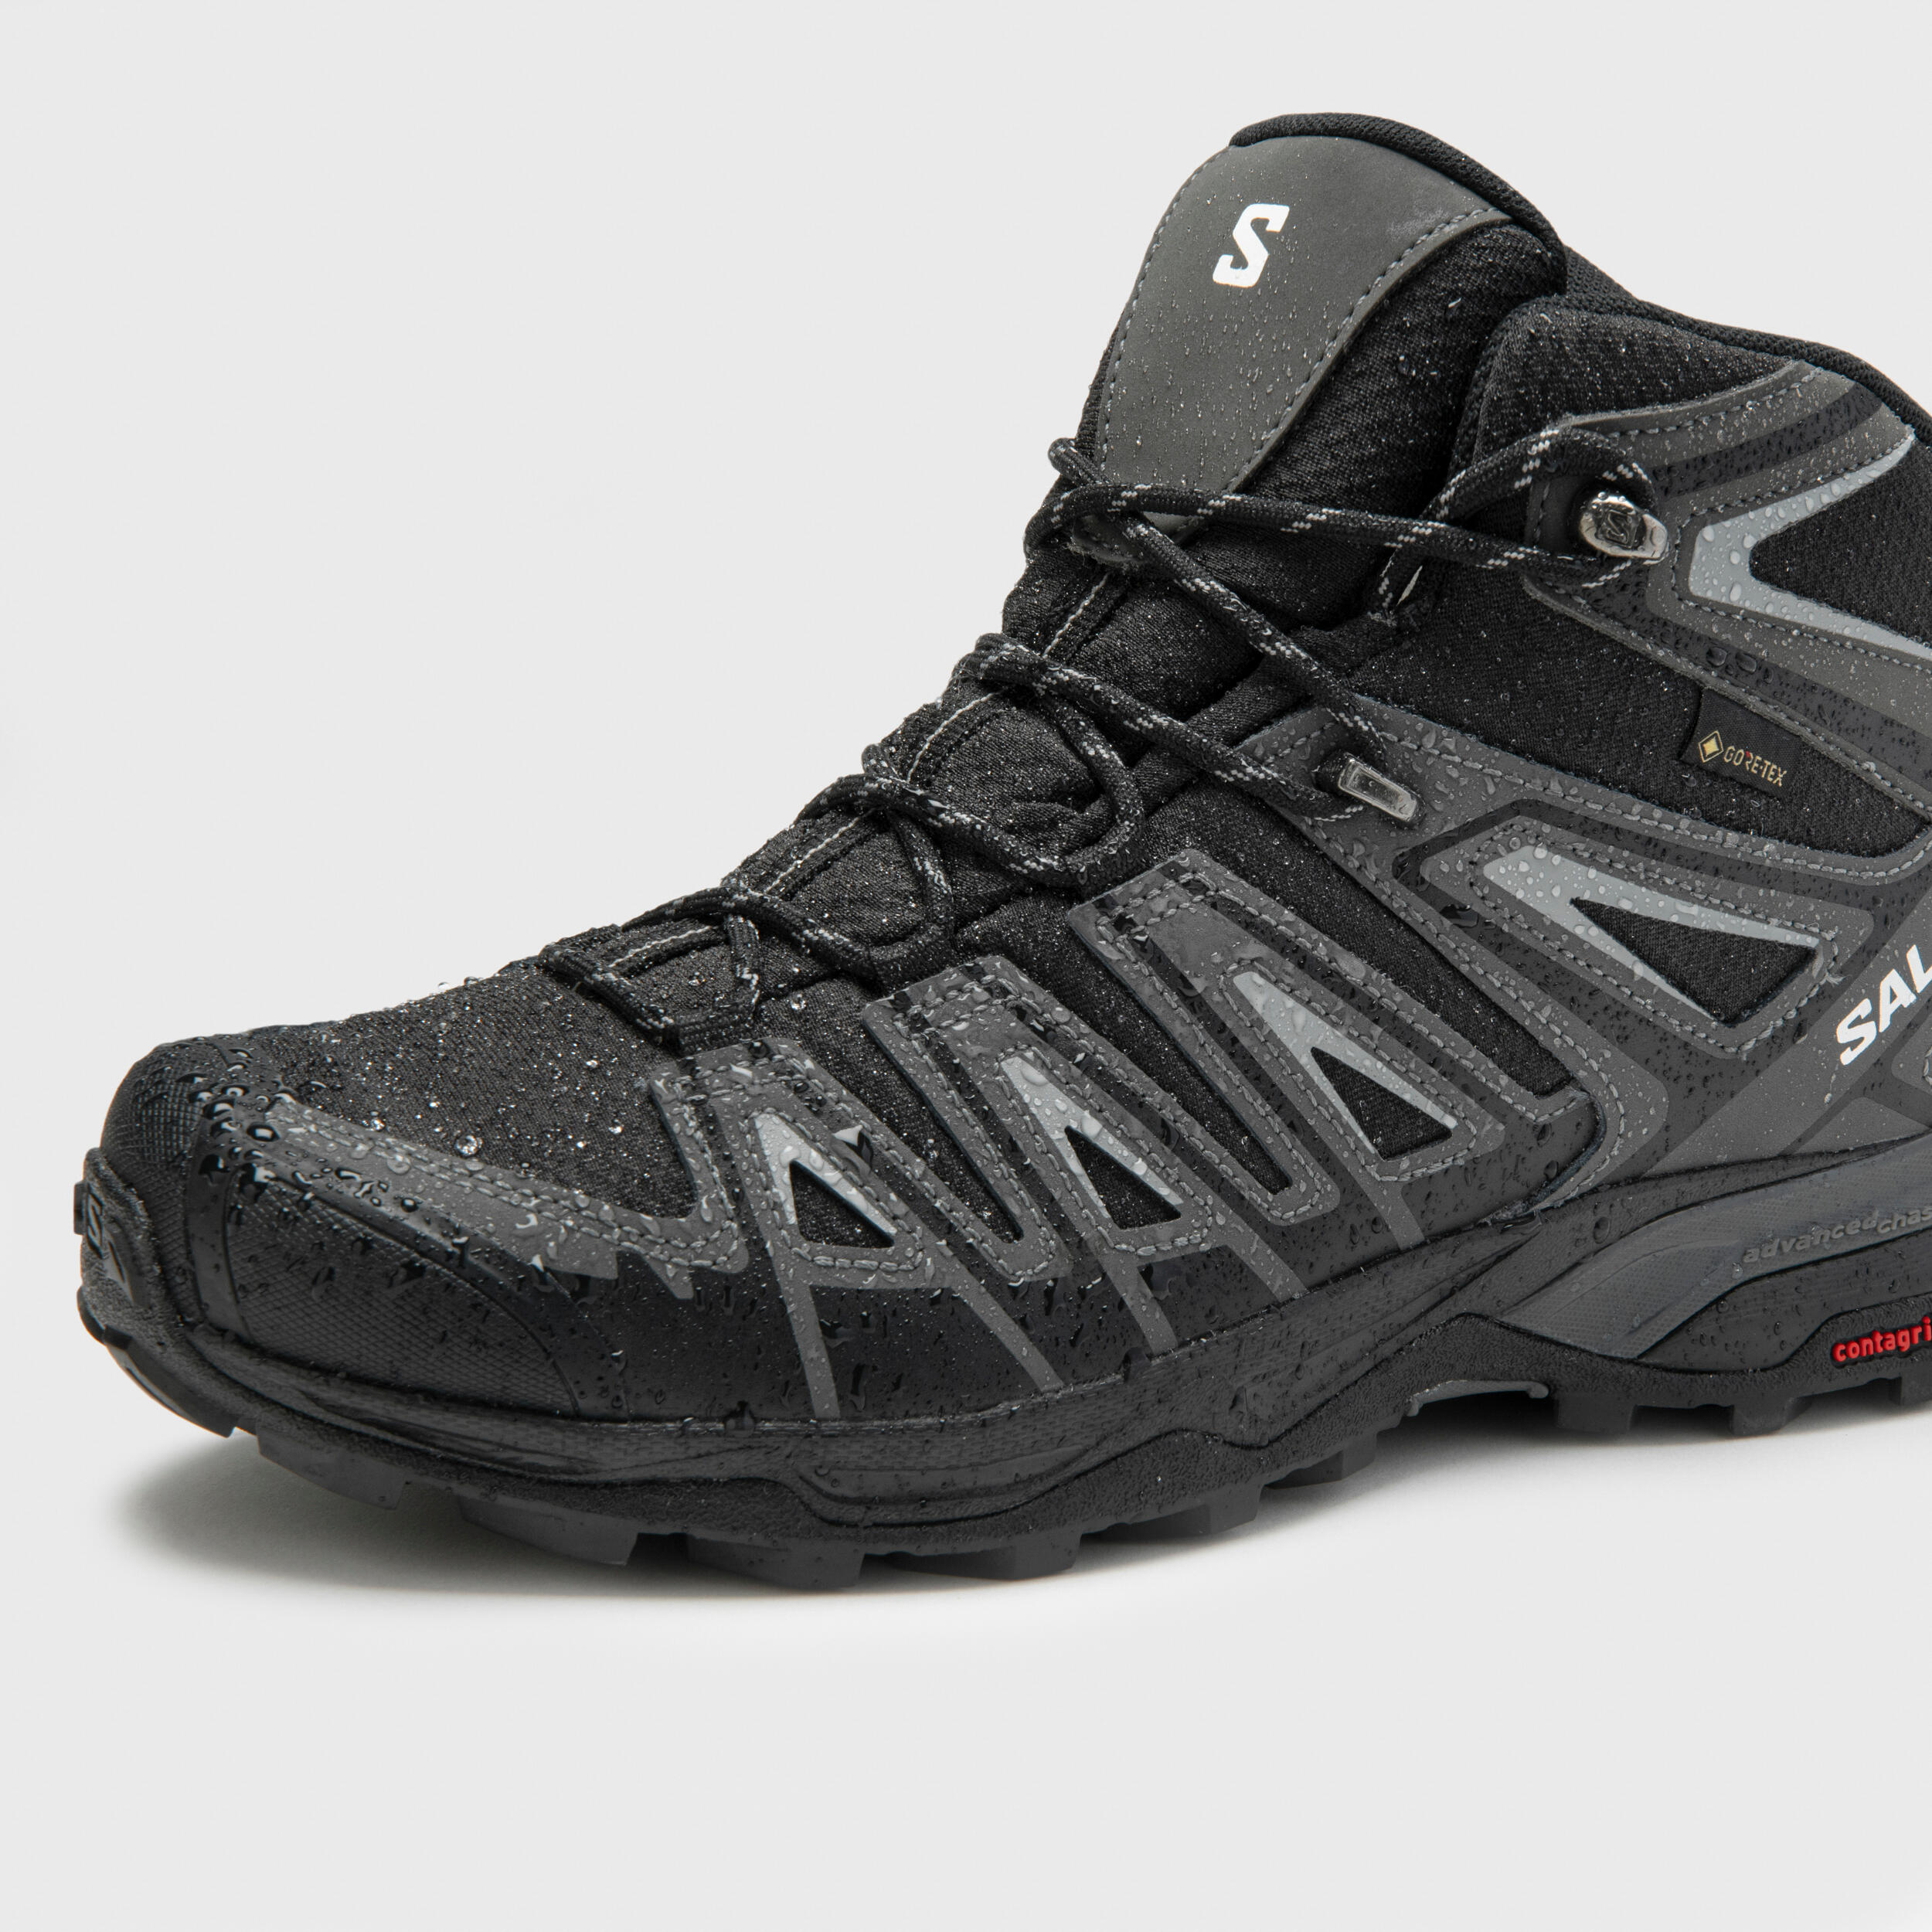 Men’s Mountain Hiking Boots Salomon X-Ultra Pioneer GoreTex Mid 5/5